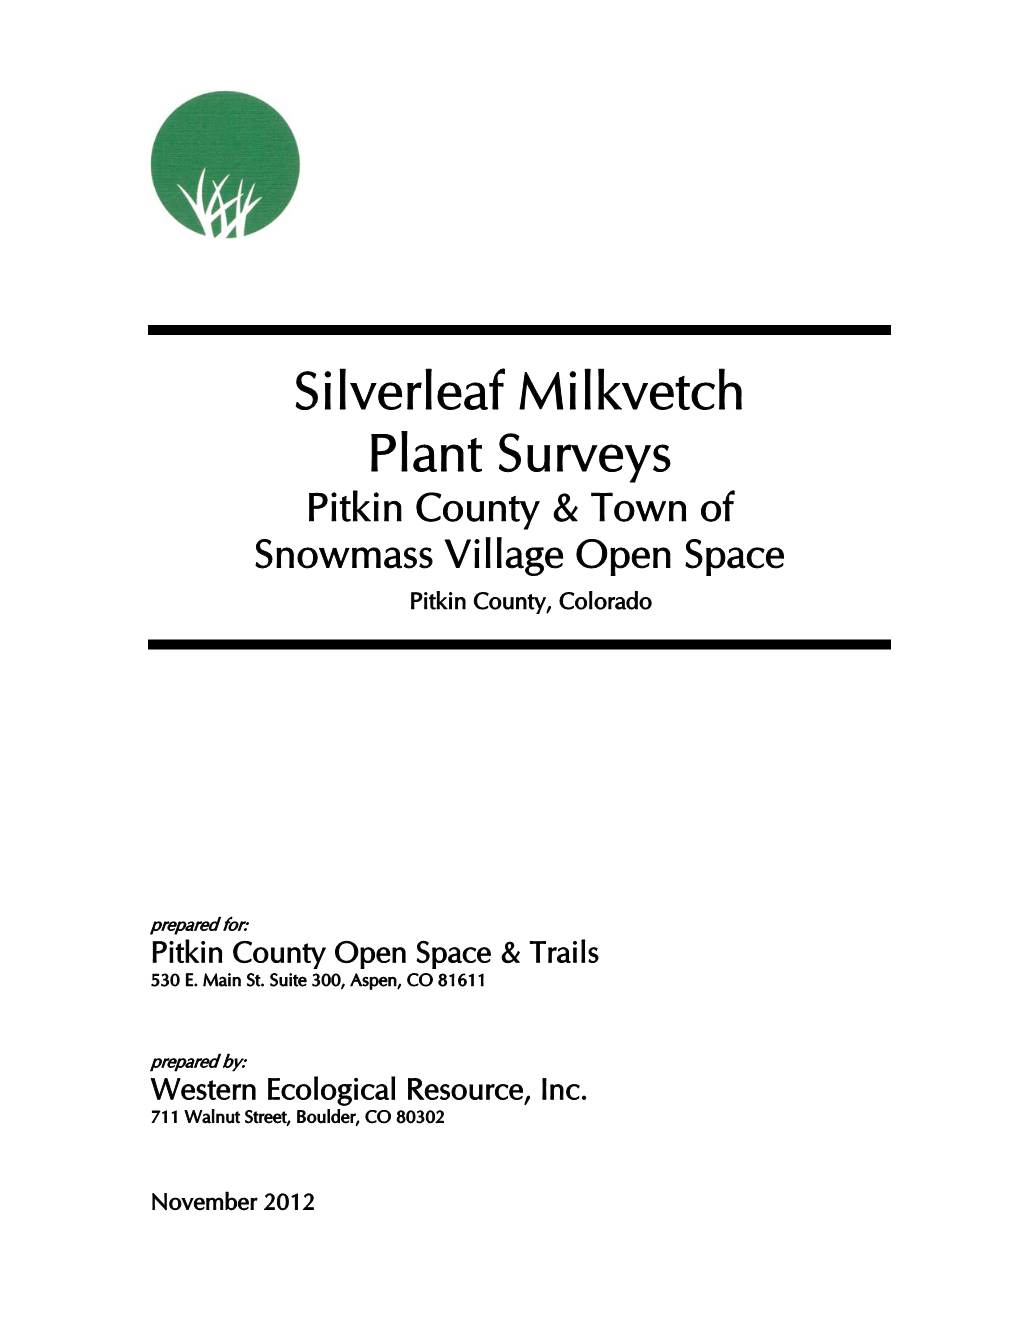 Silverleaf Milkvetch Plant Surveys (2012)